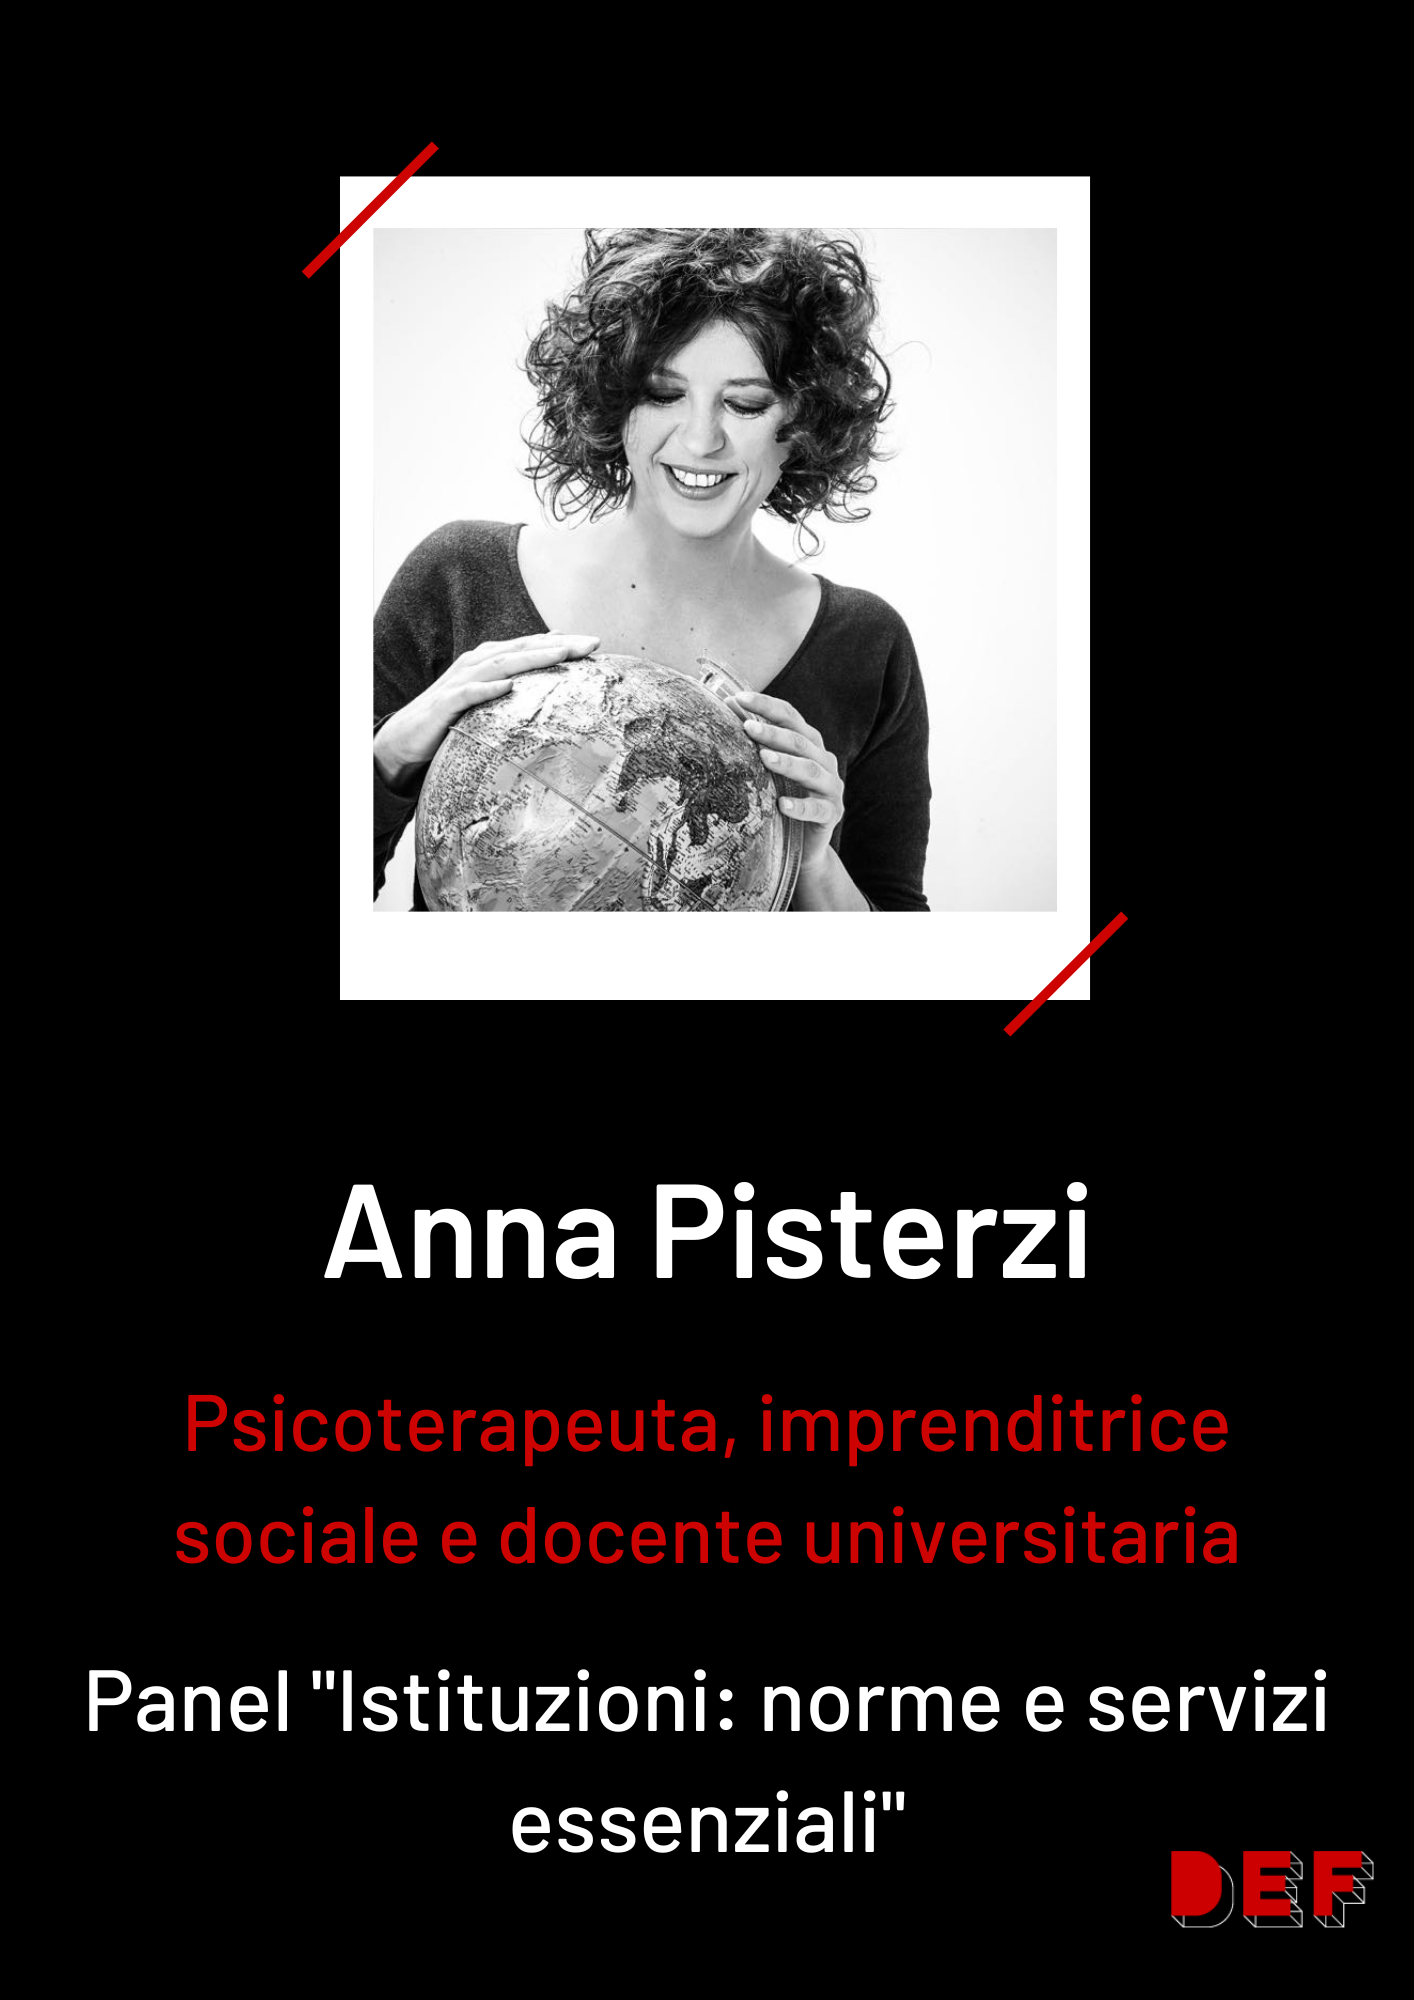 card Anna Pisterzi - DEF22